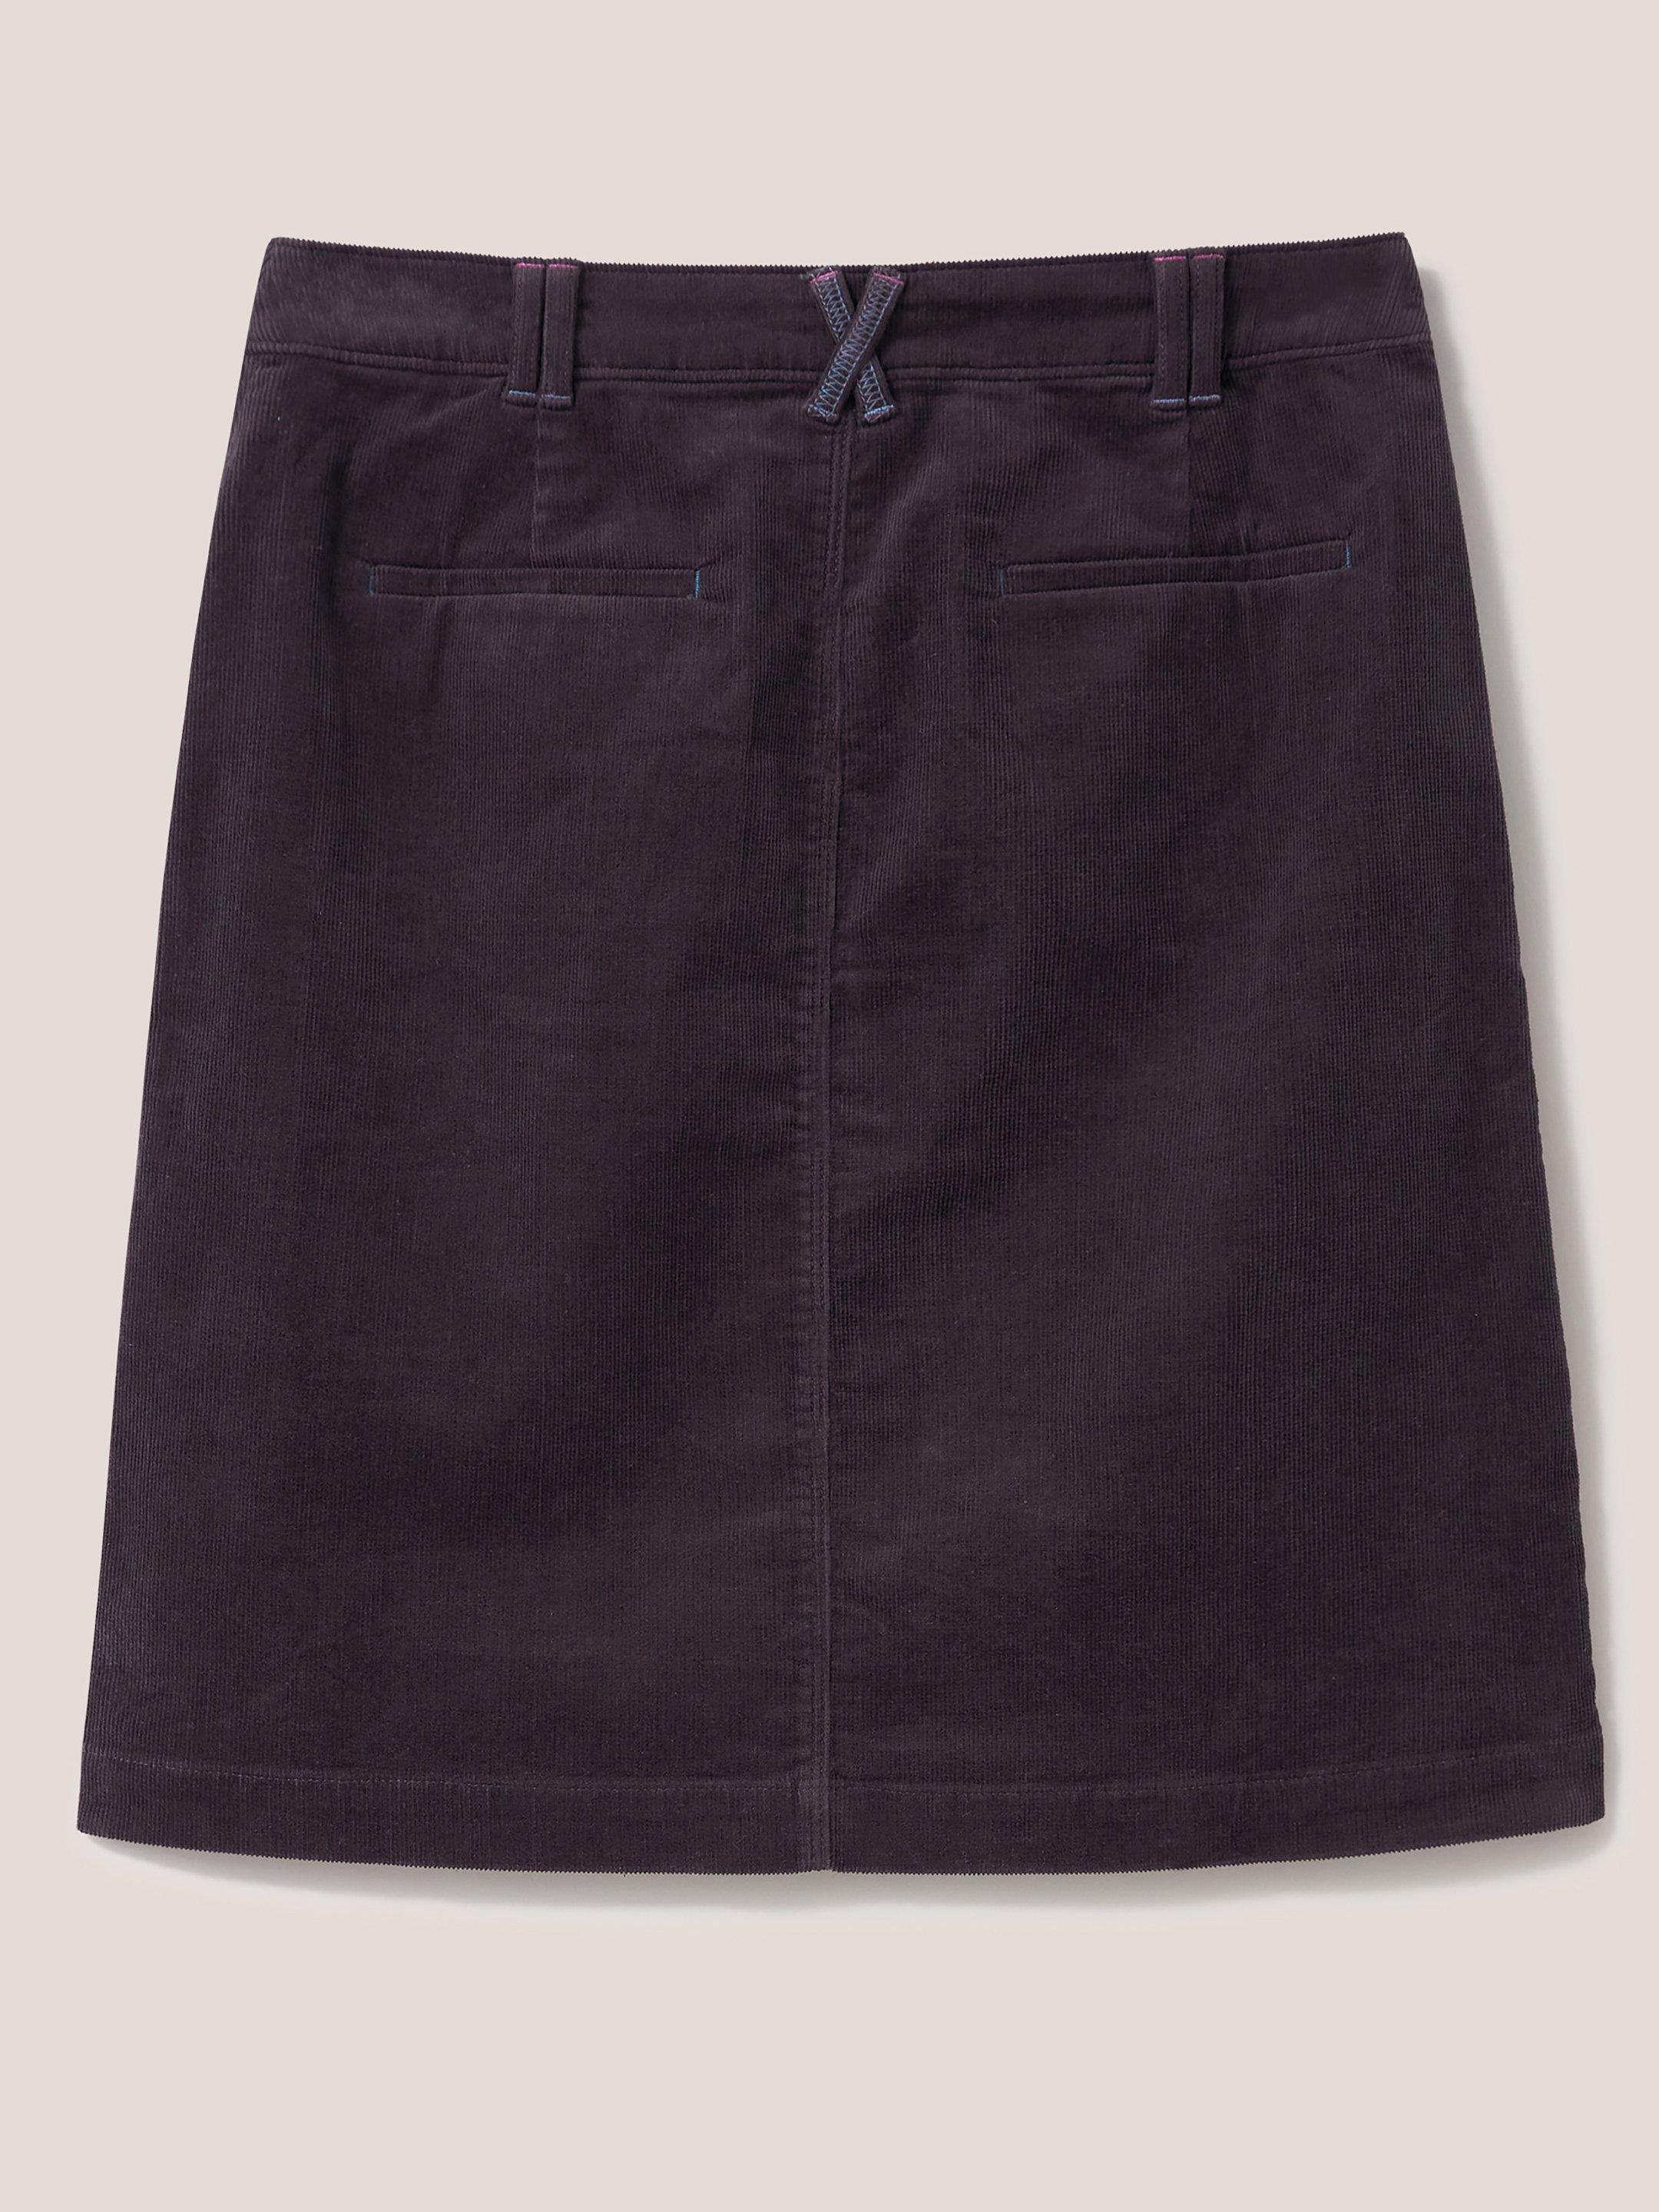 Melody Organic Cord Skirt in DARK GREY - FLAT BACK